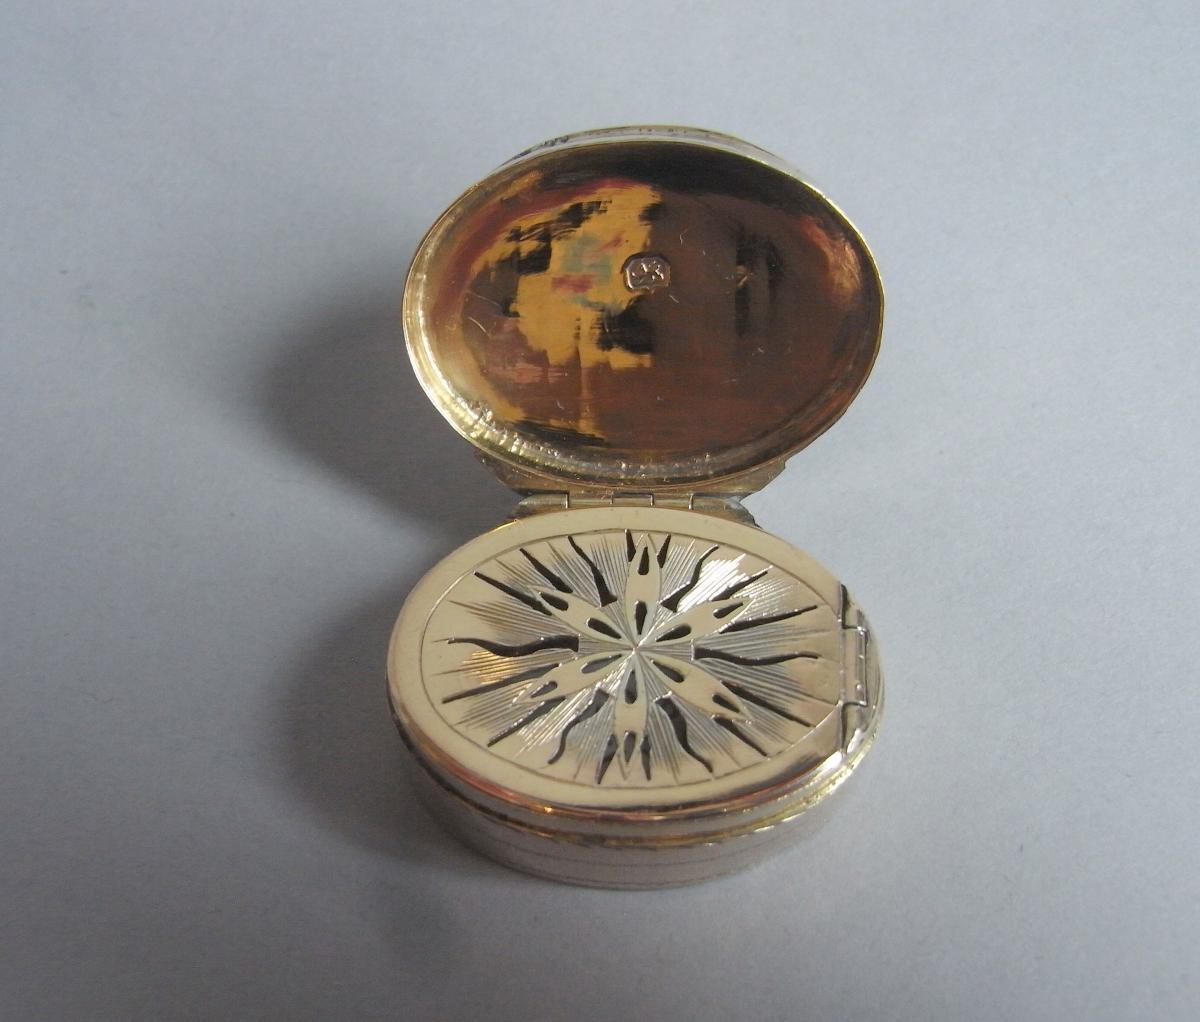 A very fine George III silver gilt oval Vinaigrette made in London in 1800 by Lockwood & Douglas